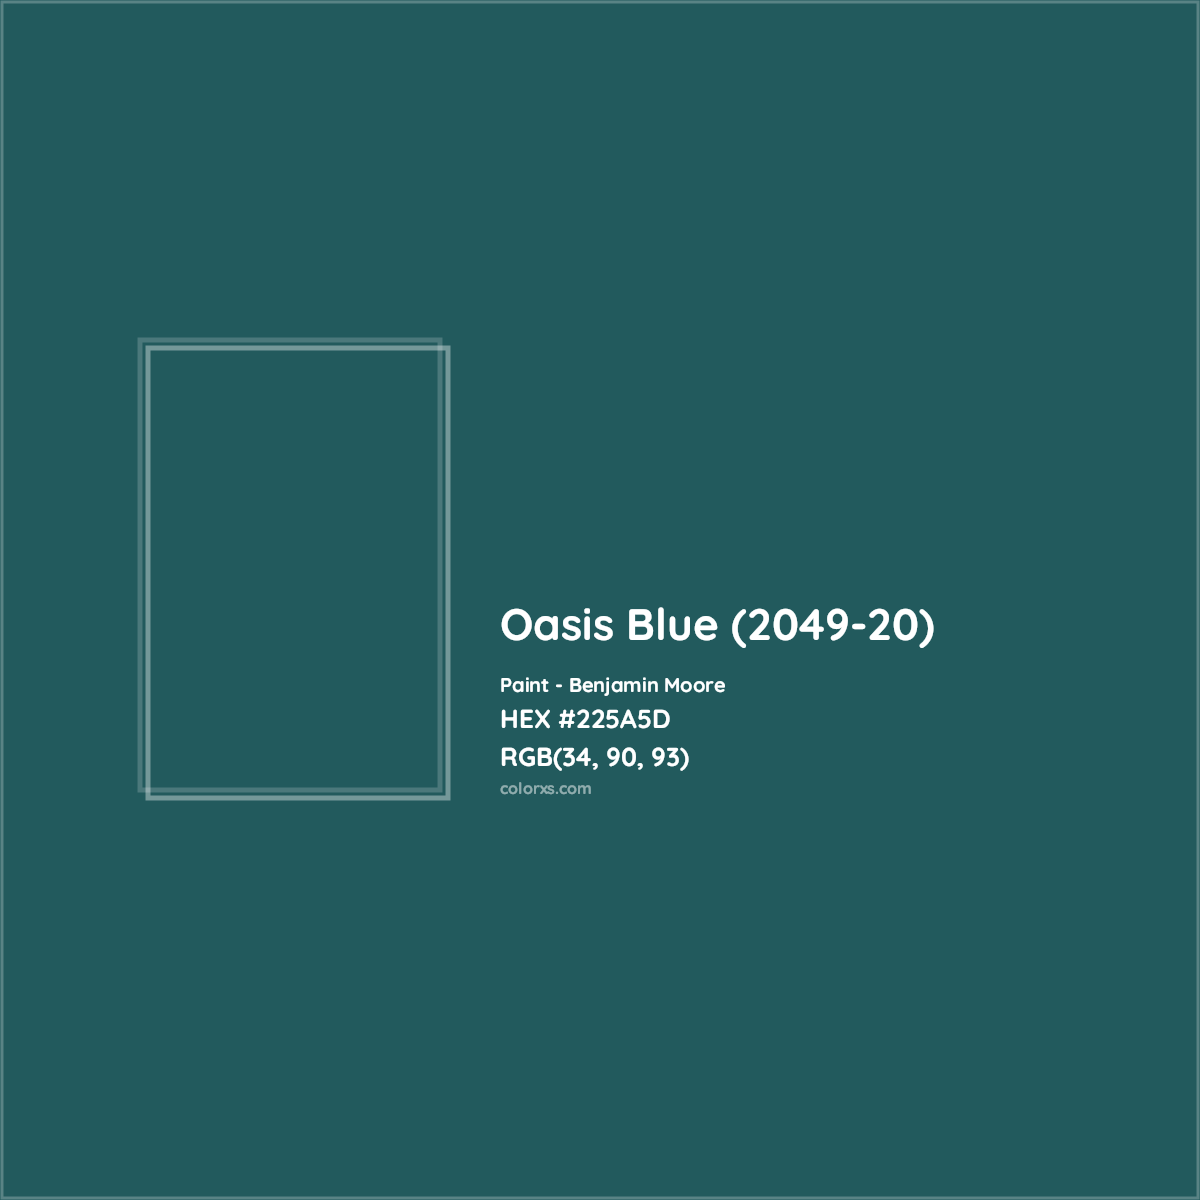 HEX #225A5D Oasis Blue (2049-20) Paint Benjamin Moore - Color Code